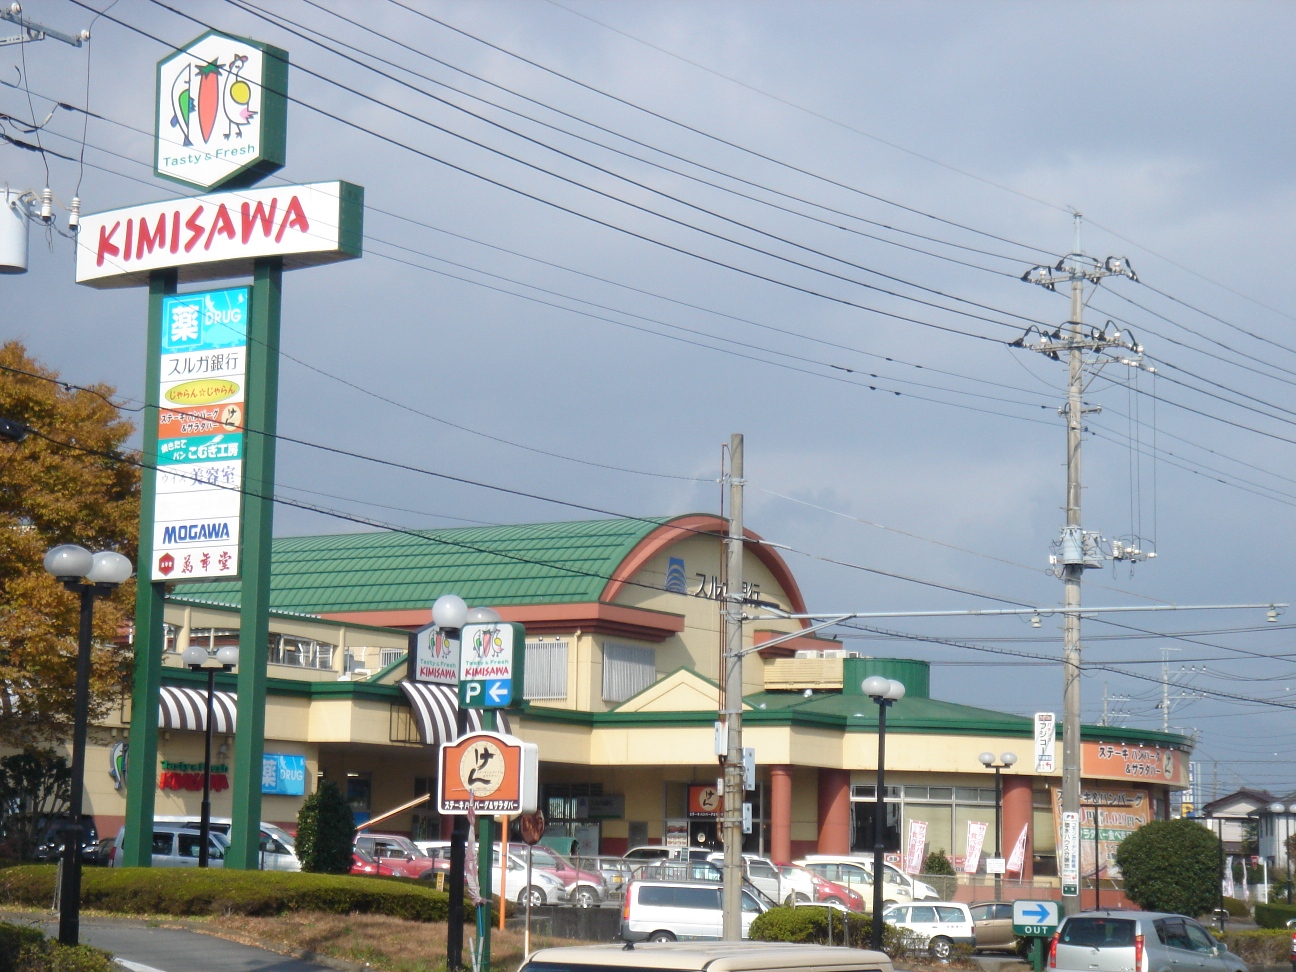 Supermarket. Kimisawa Gotemba 246 stores up to (super) 499m